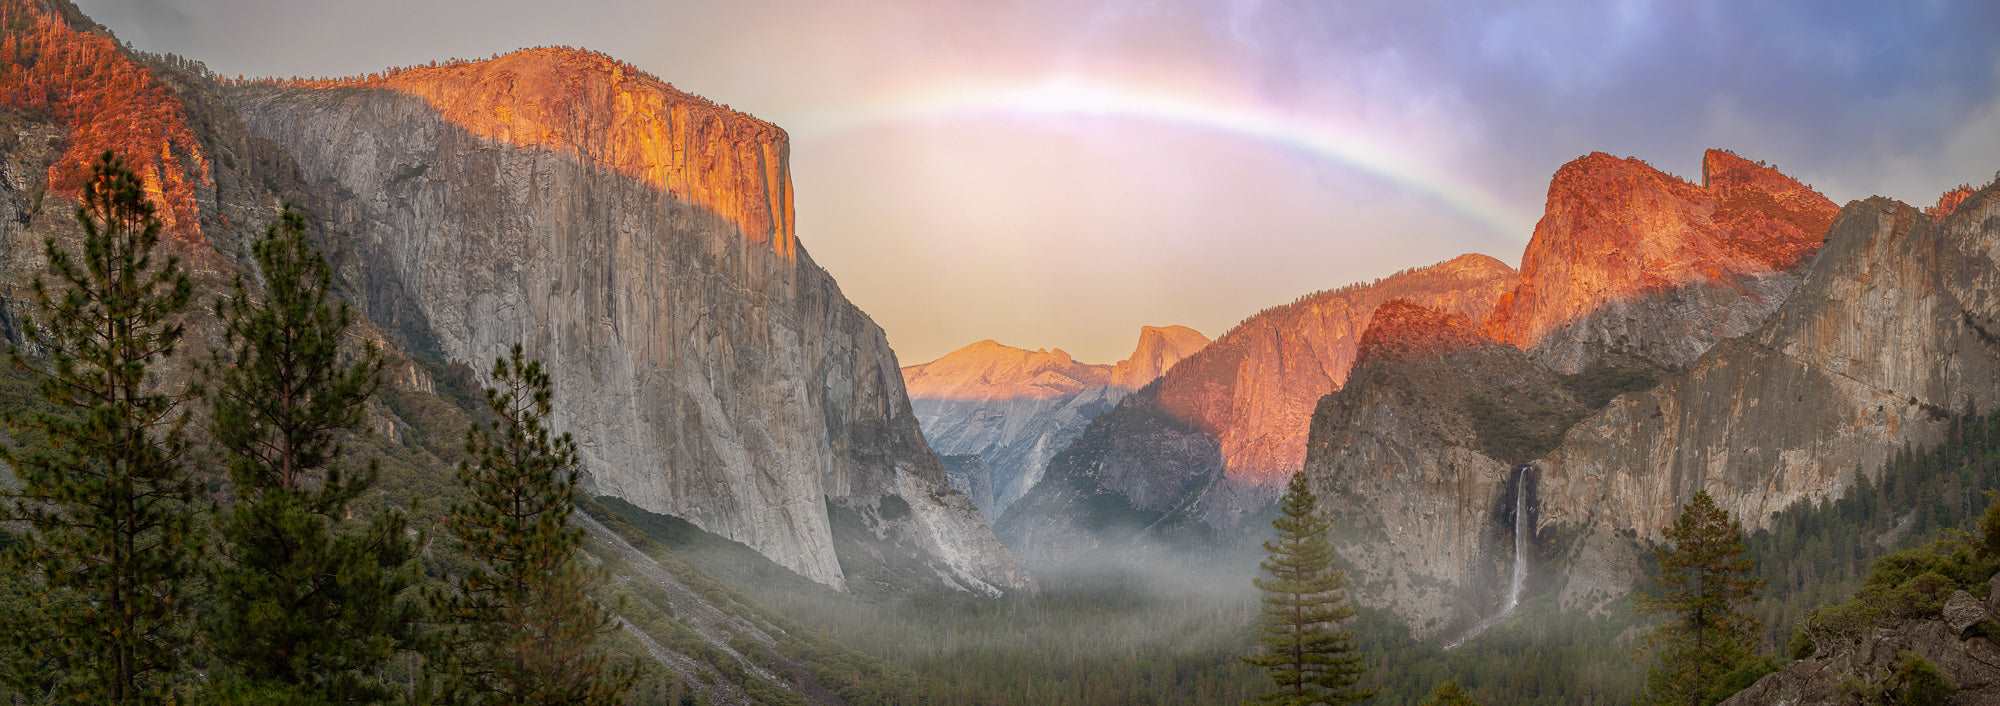 Yosemite's Golden Embrace: A Sunset's Radiant Promise - Stephen Milner